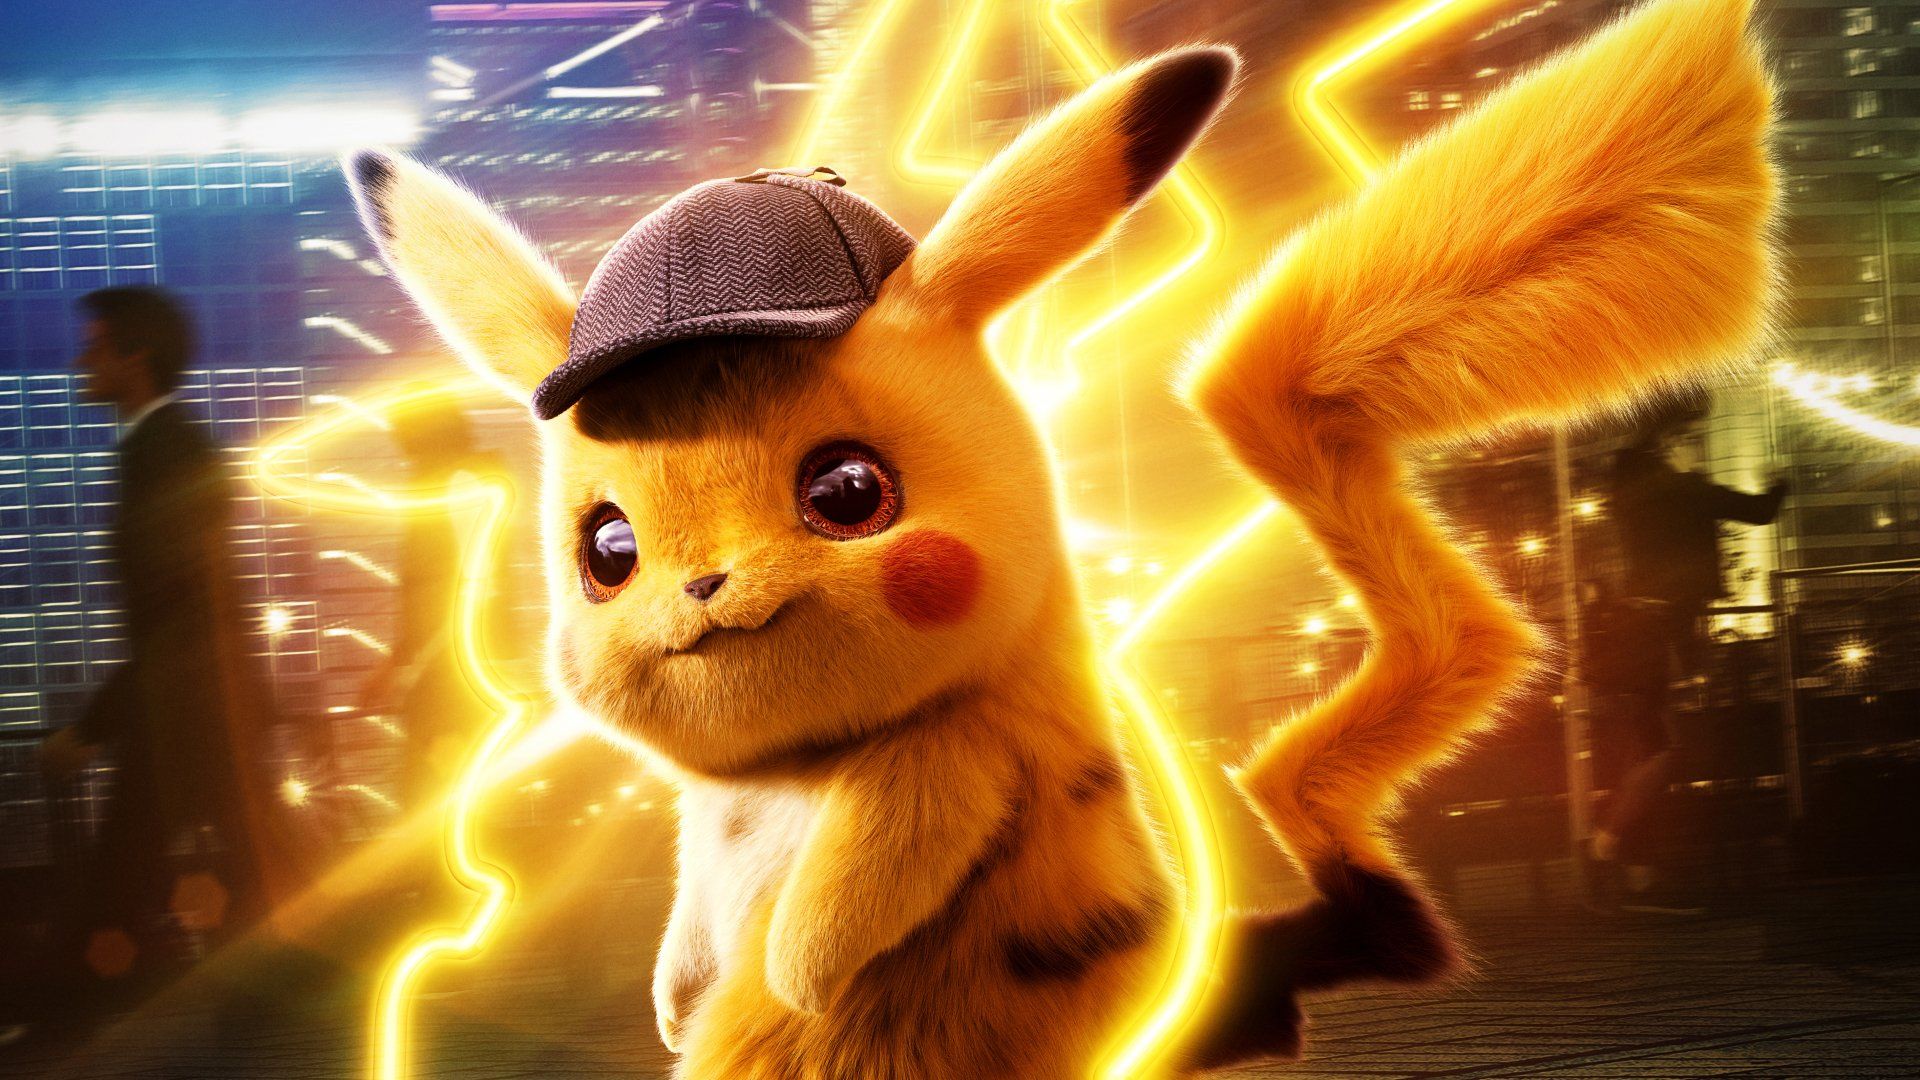 Pokémon Detective Pikachu HD Wallpaper and Background Image